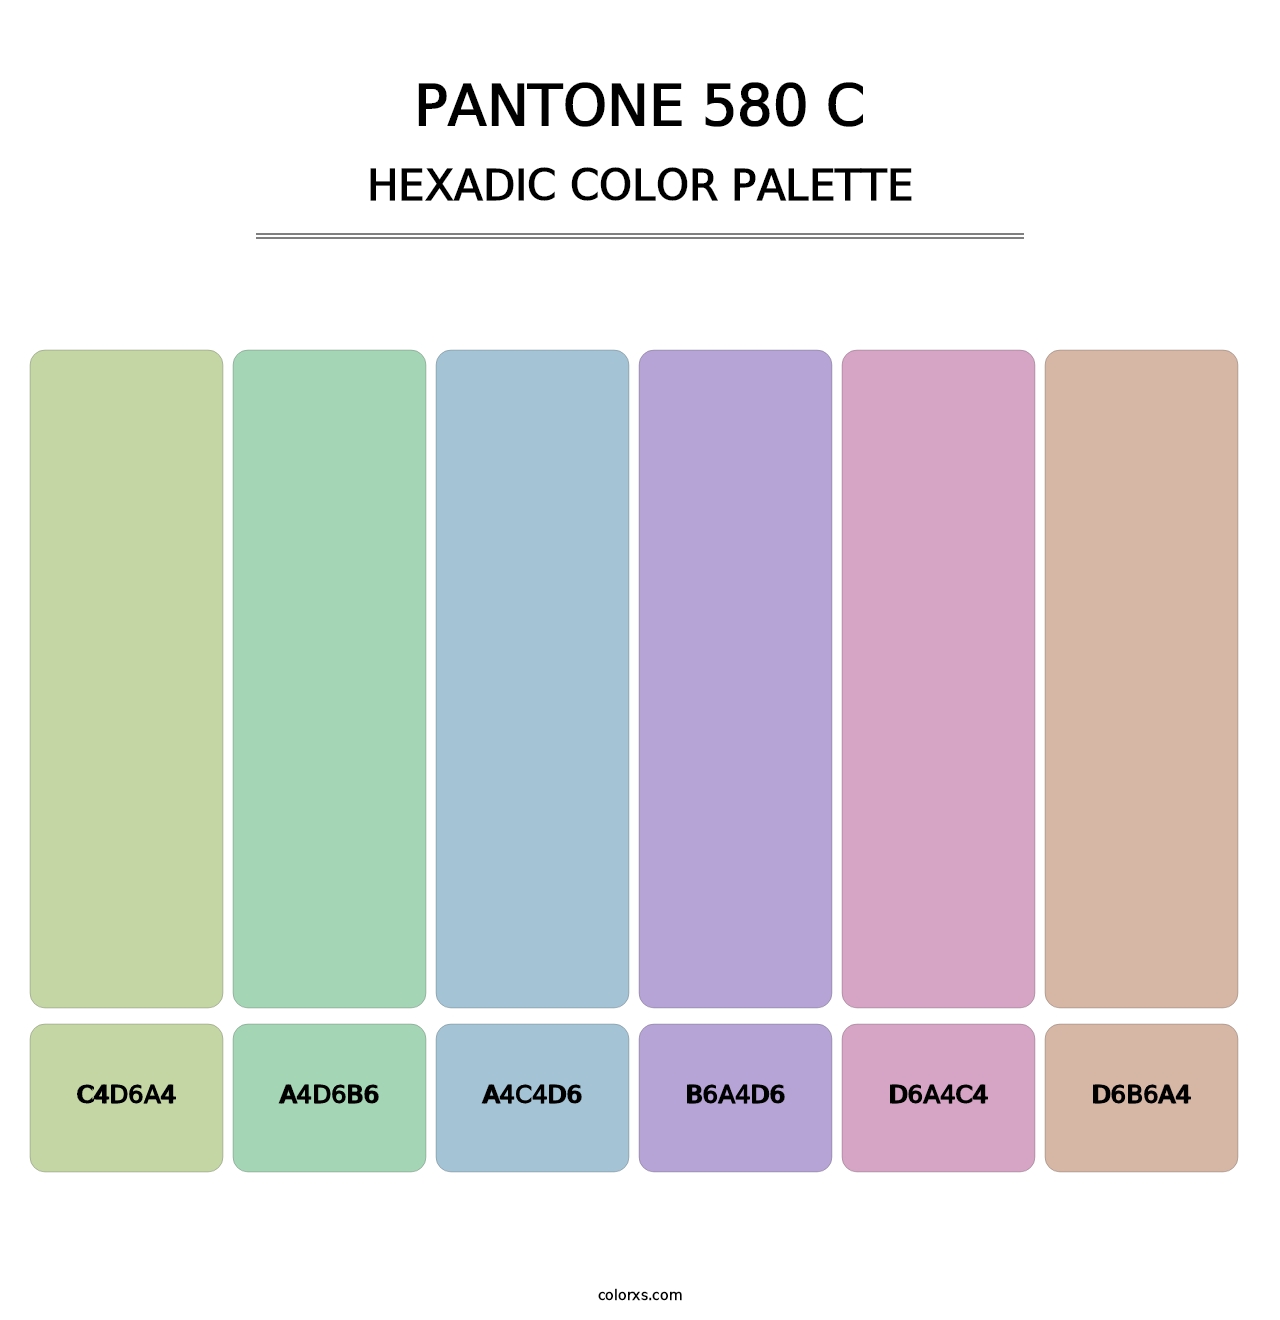 PANTONE 580 C - Hexadic Color Palette